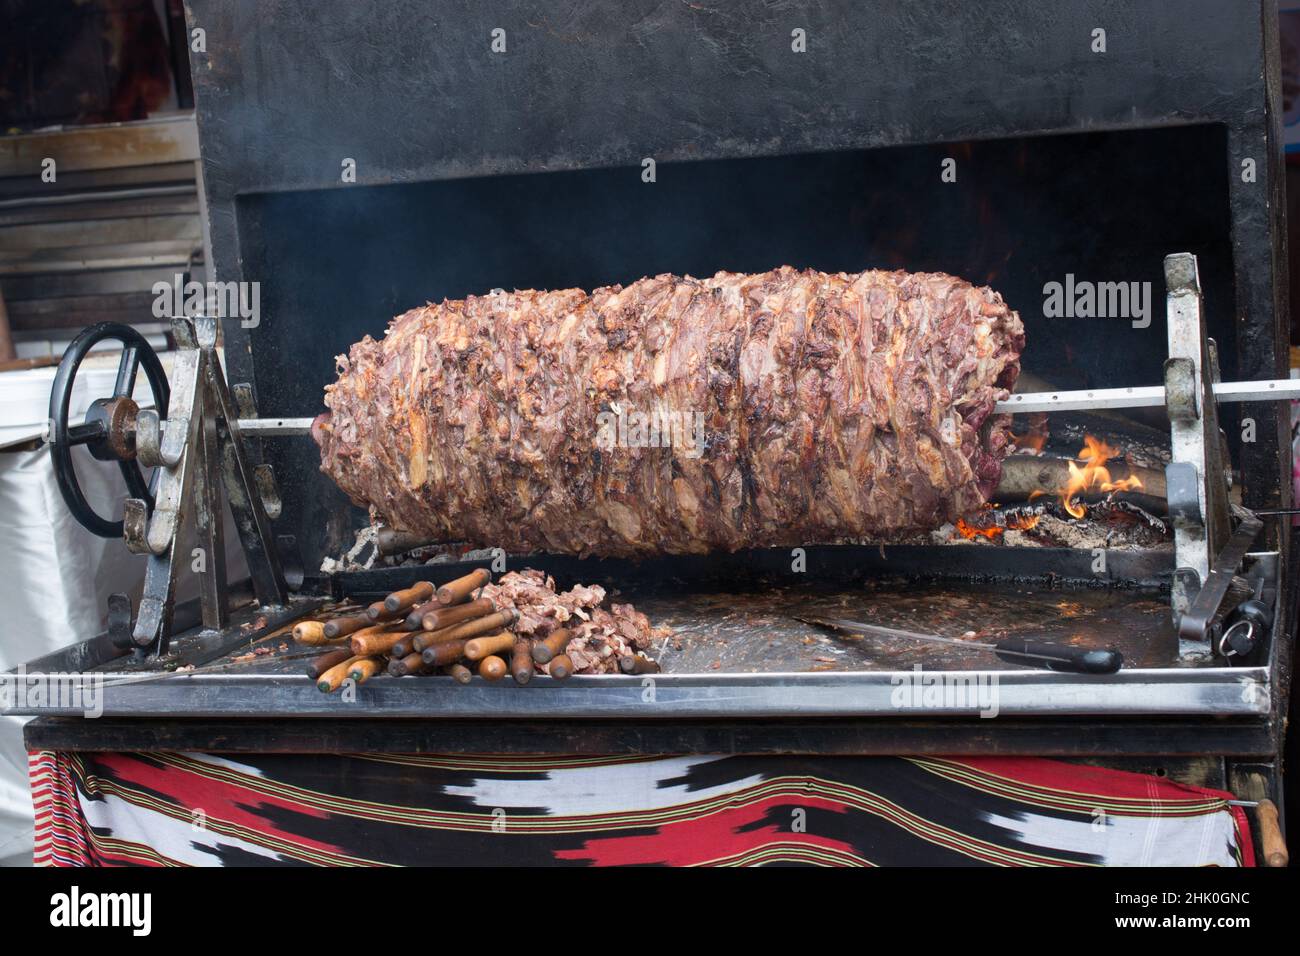 Turkish cag Kebab on pole in horizontal position. Stock Photo